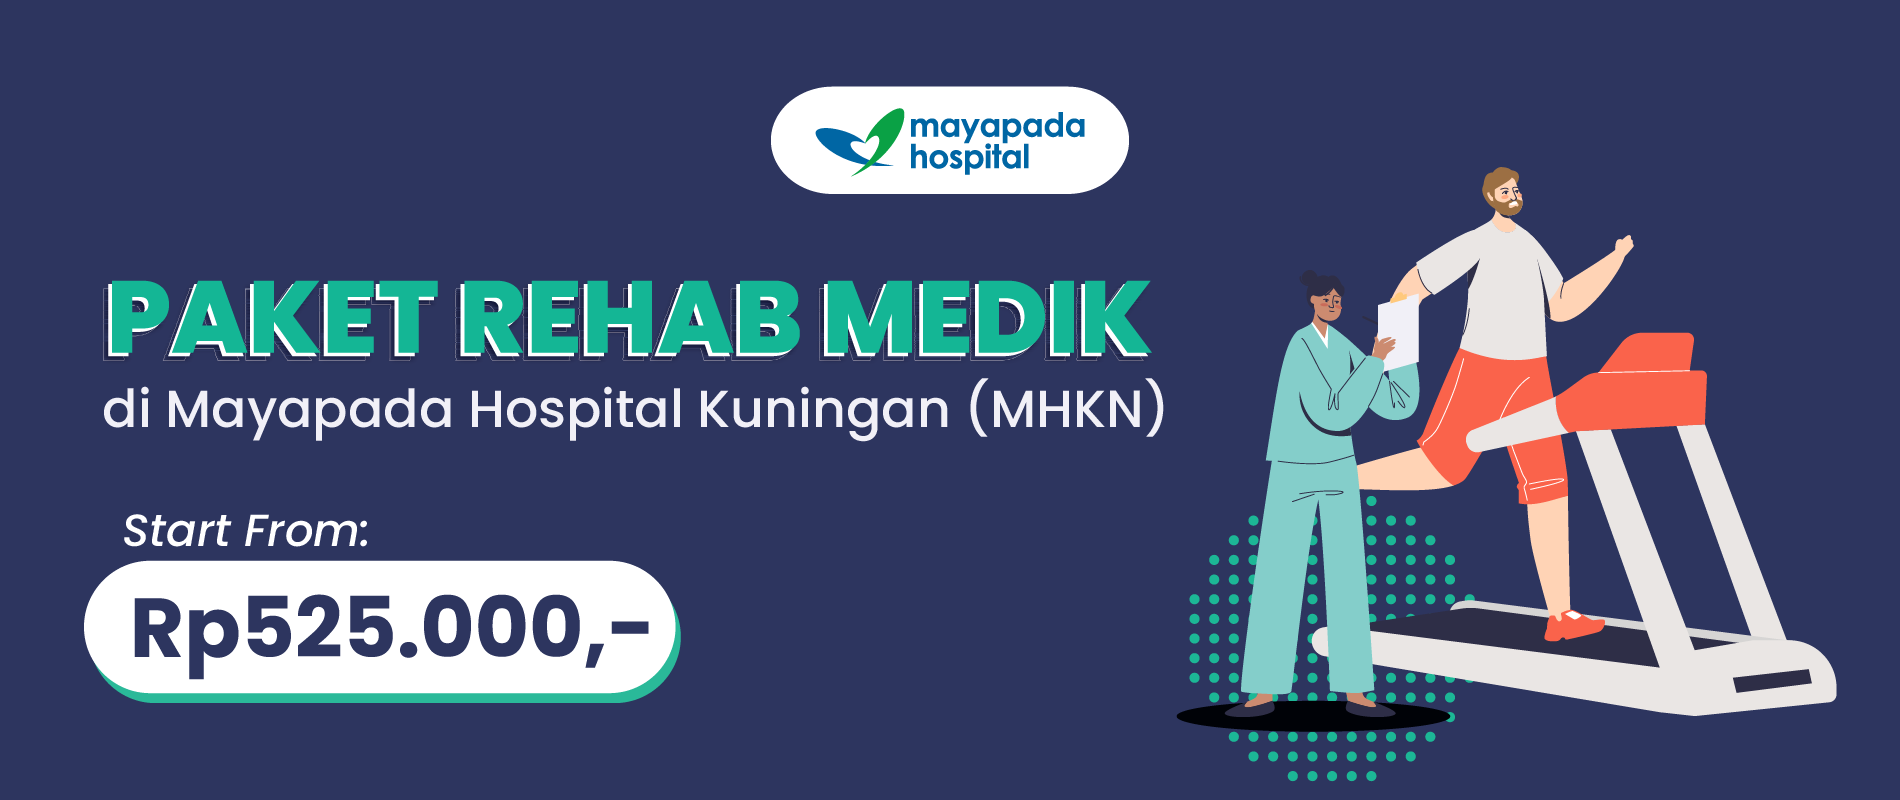 Paket Rehab Medik Mayapada Hospital Kuningan IMG